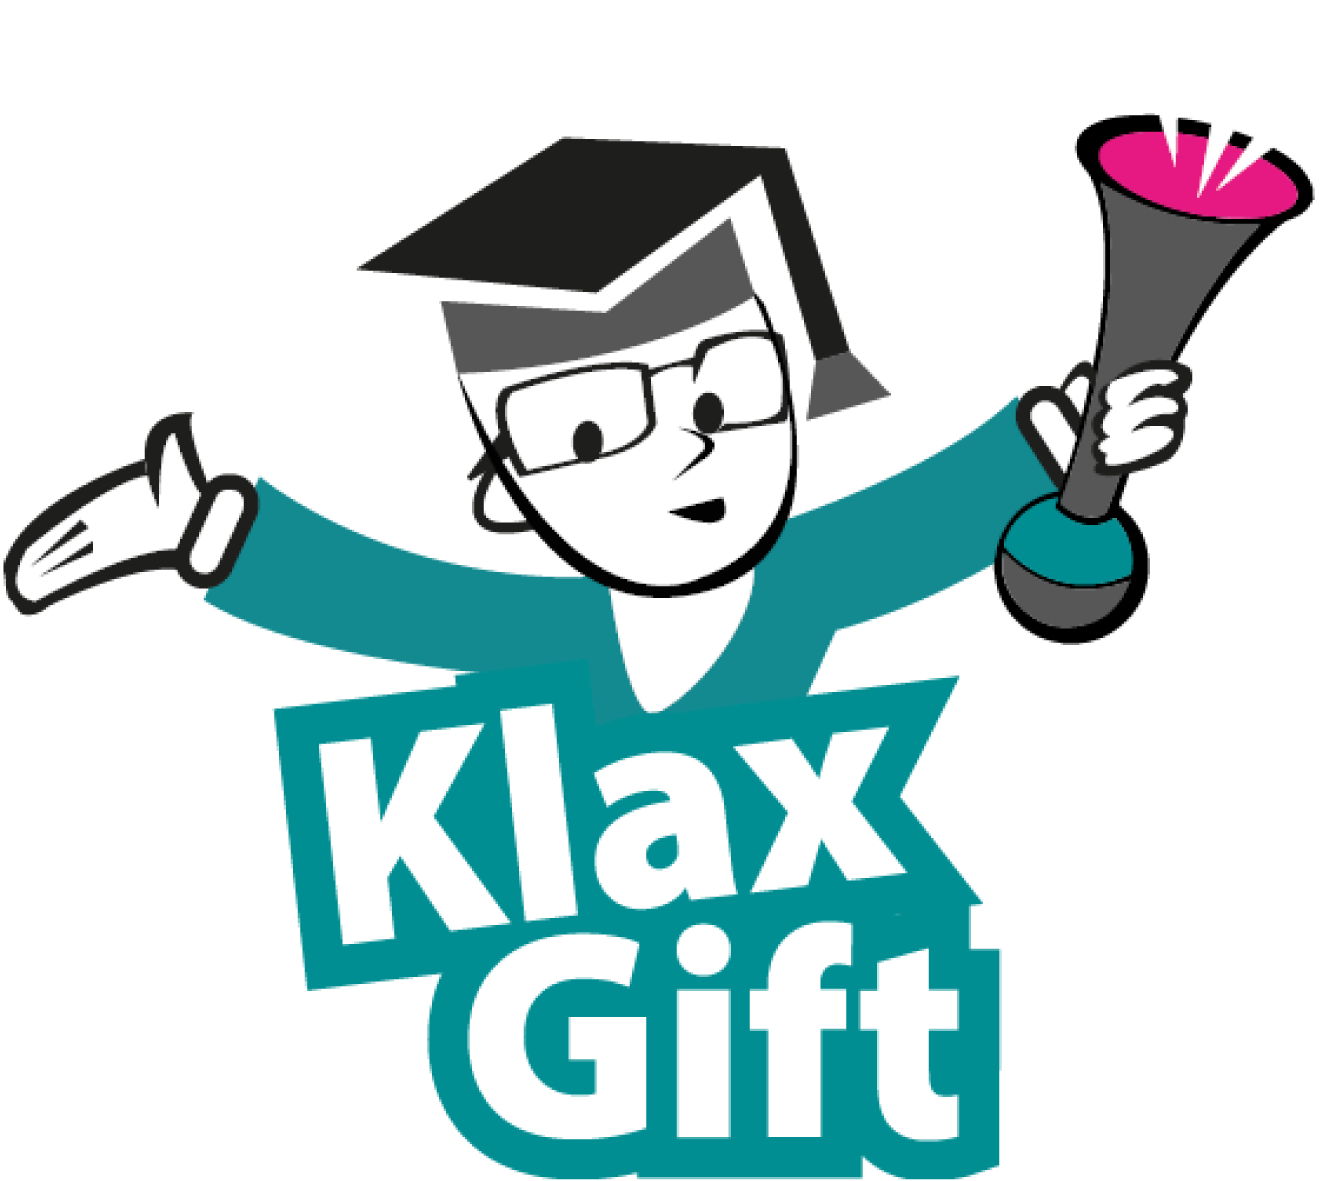 klax-gift